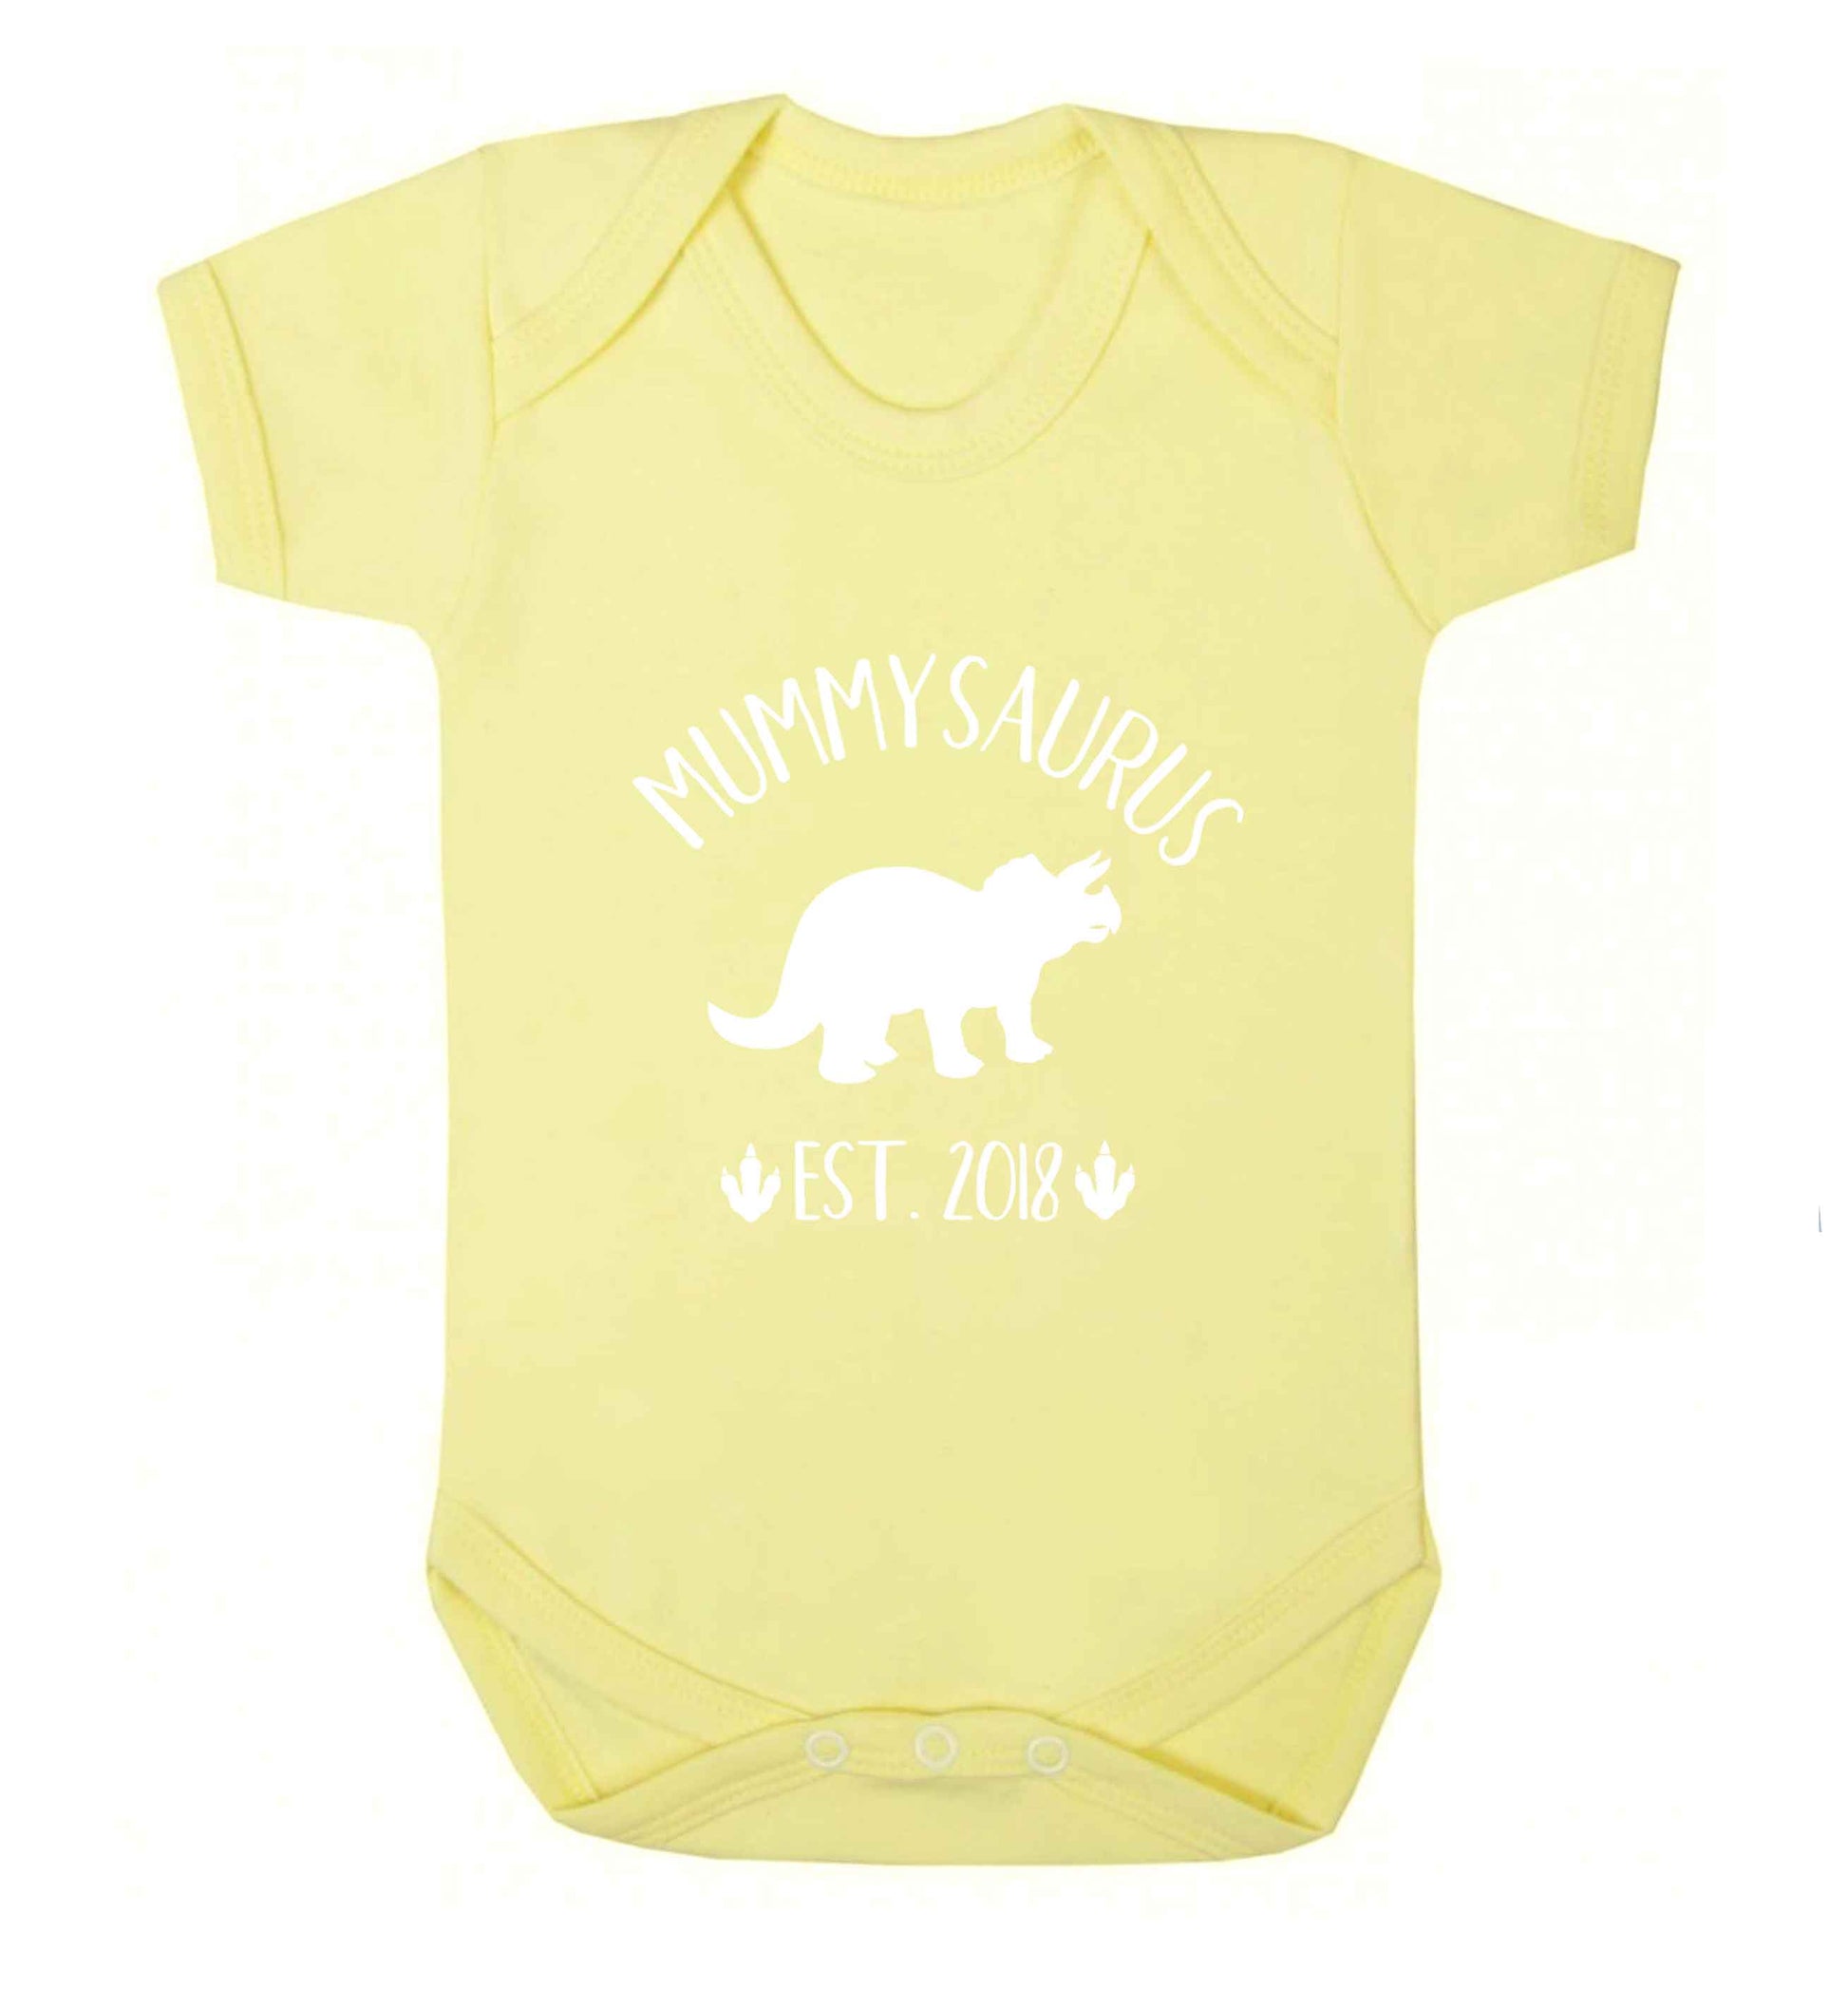 Personalised mummysaurus date baby vest pale yellow 18-24 months